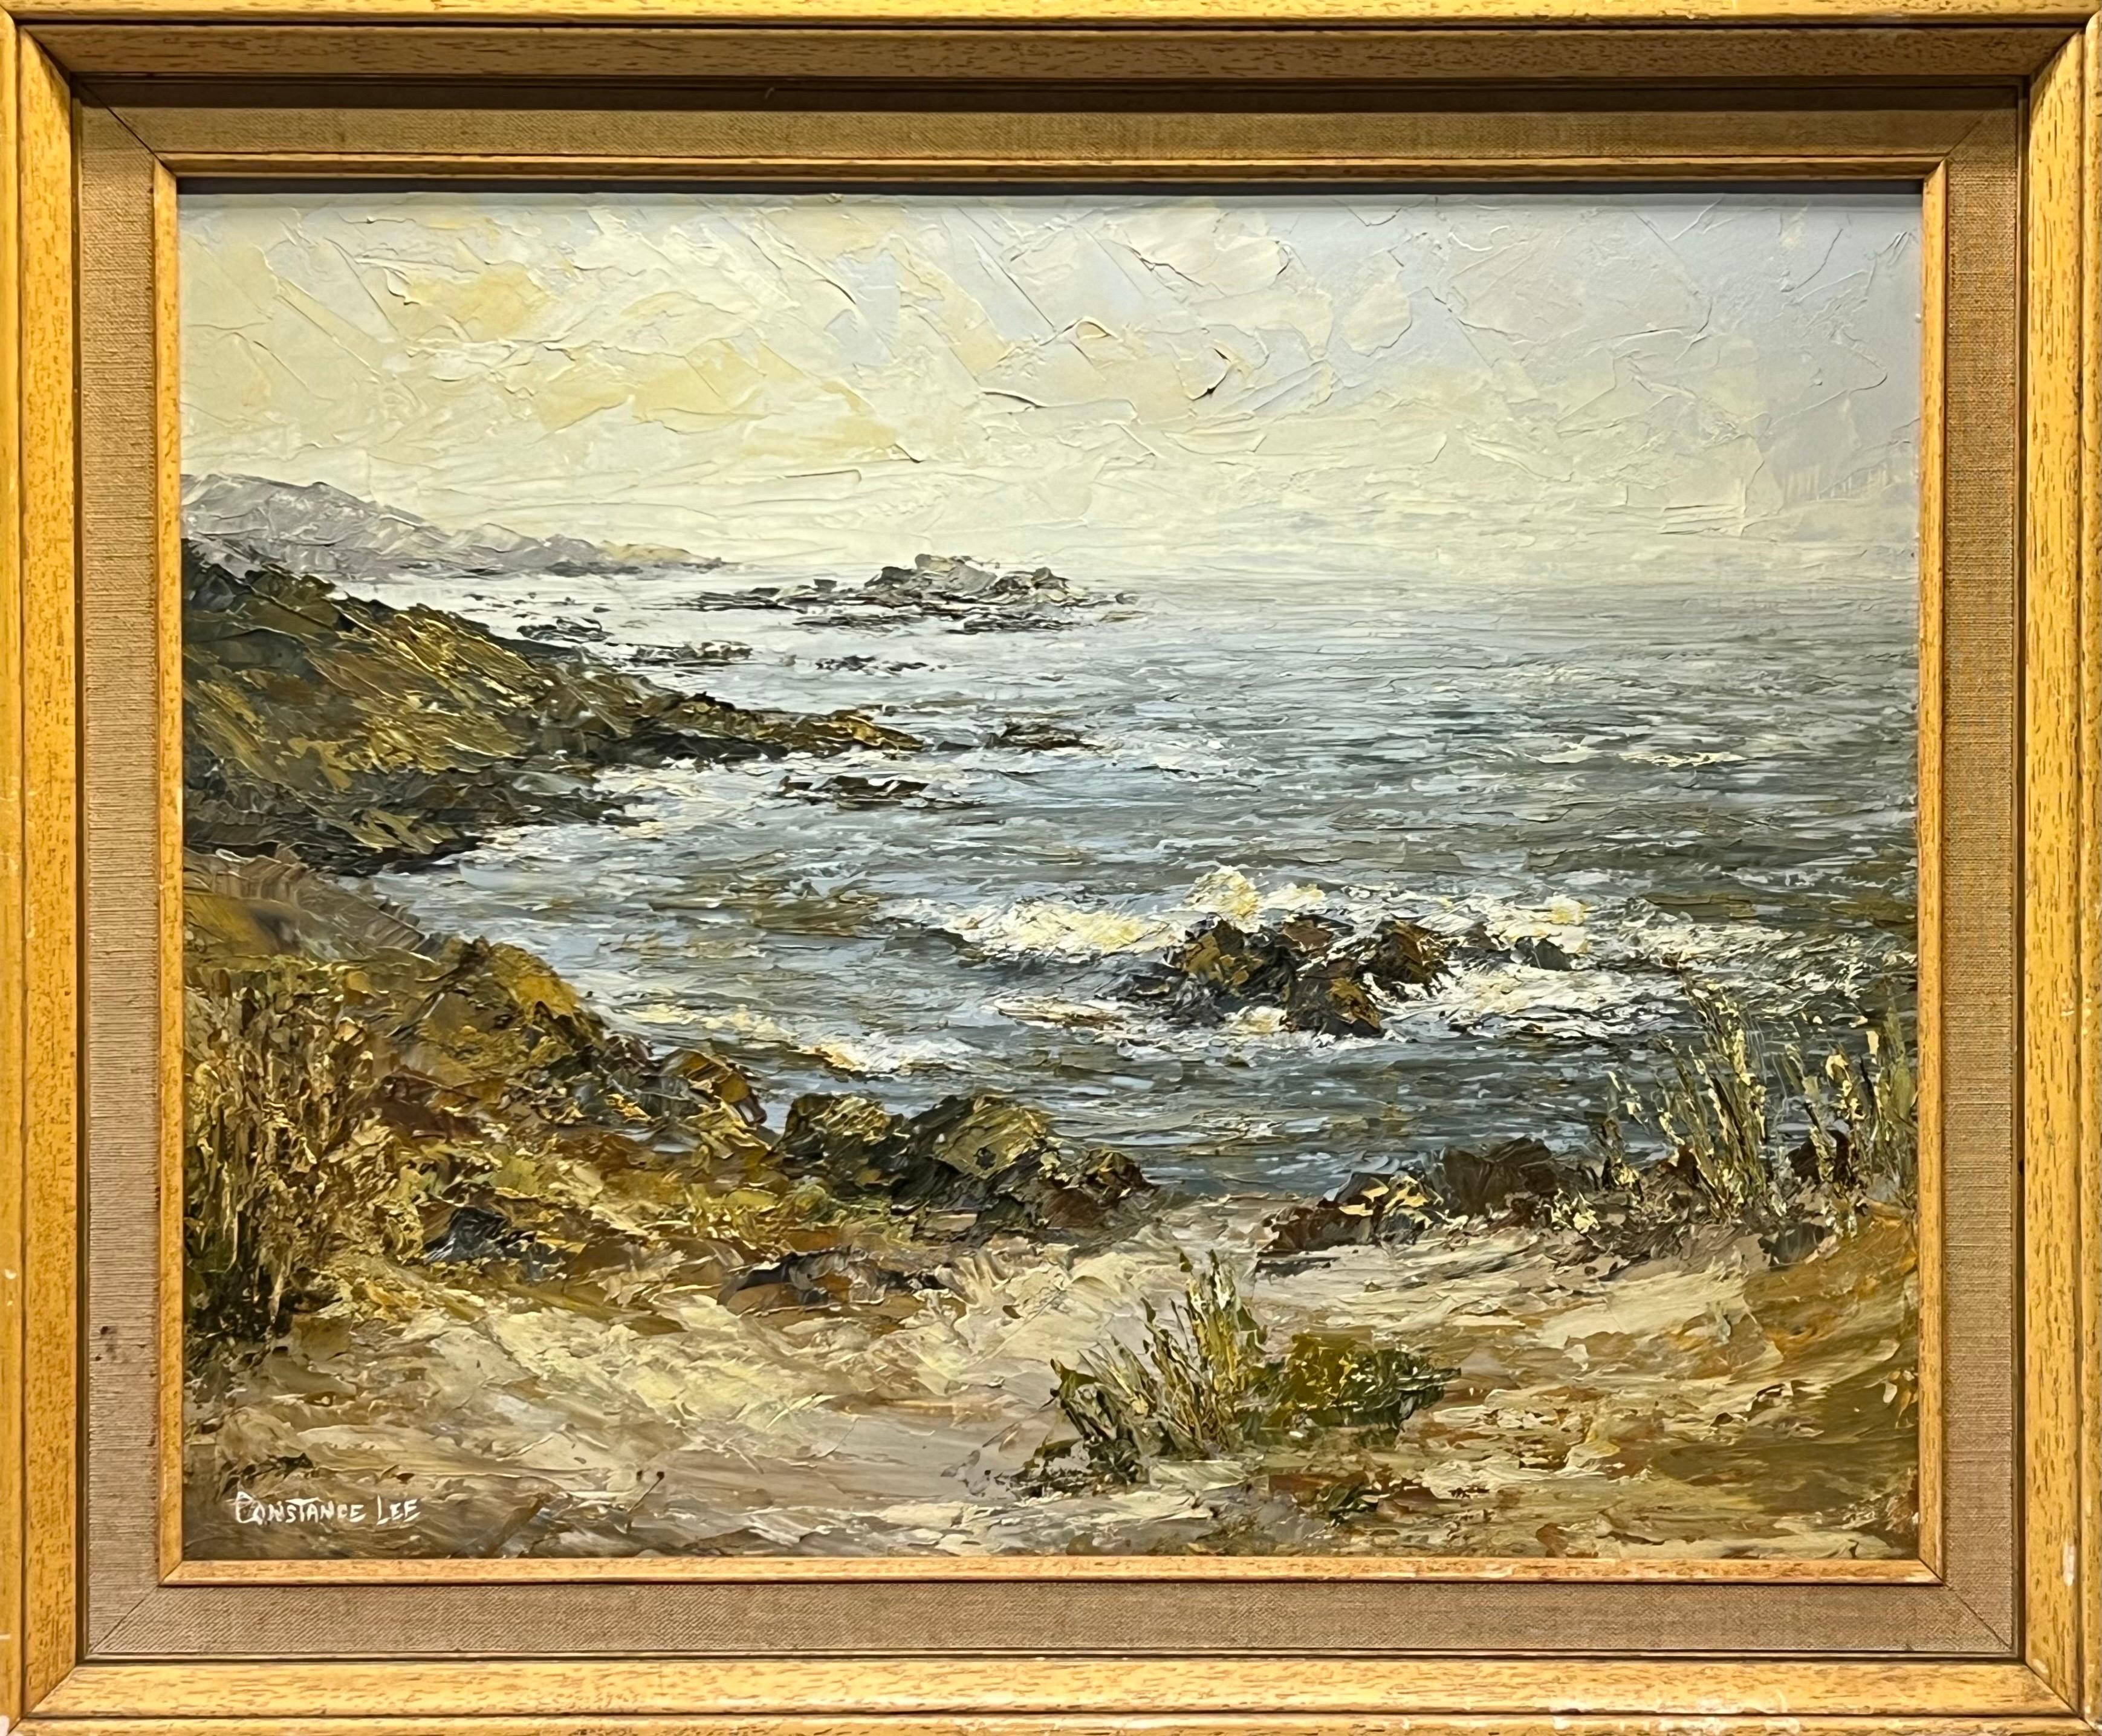 Constance Lee Abstract Painting – Kalifornische Küstenlandschaft, Meereslandschaft, Landschaft, Impasto-Gemälde des Künstlers des 20. Jahrhunderts